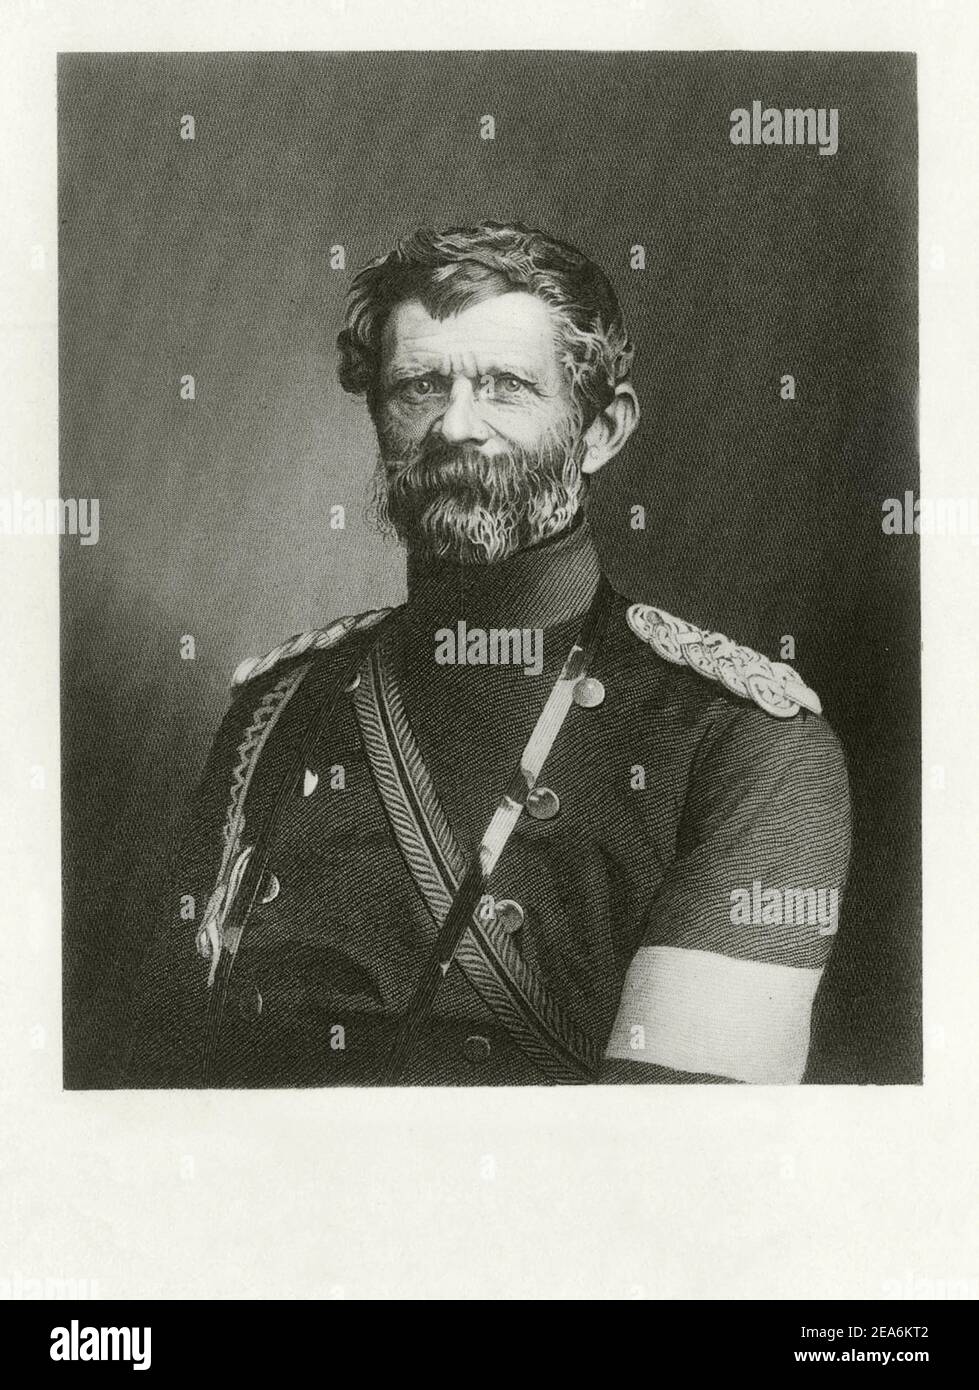 Edwin Karl Rochus Freiherr von Manteuffel (1809 – 1885) was a Prussian Generalfeldmarschall noted for his victories in the Franco-Prussian War. Stock Photo